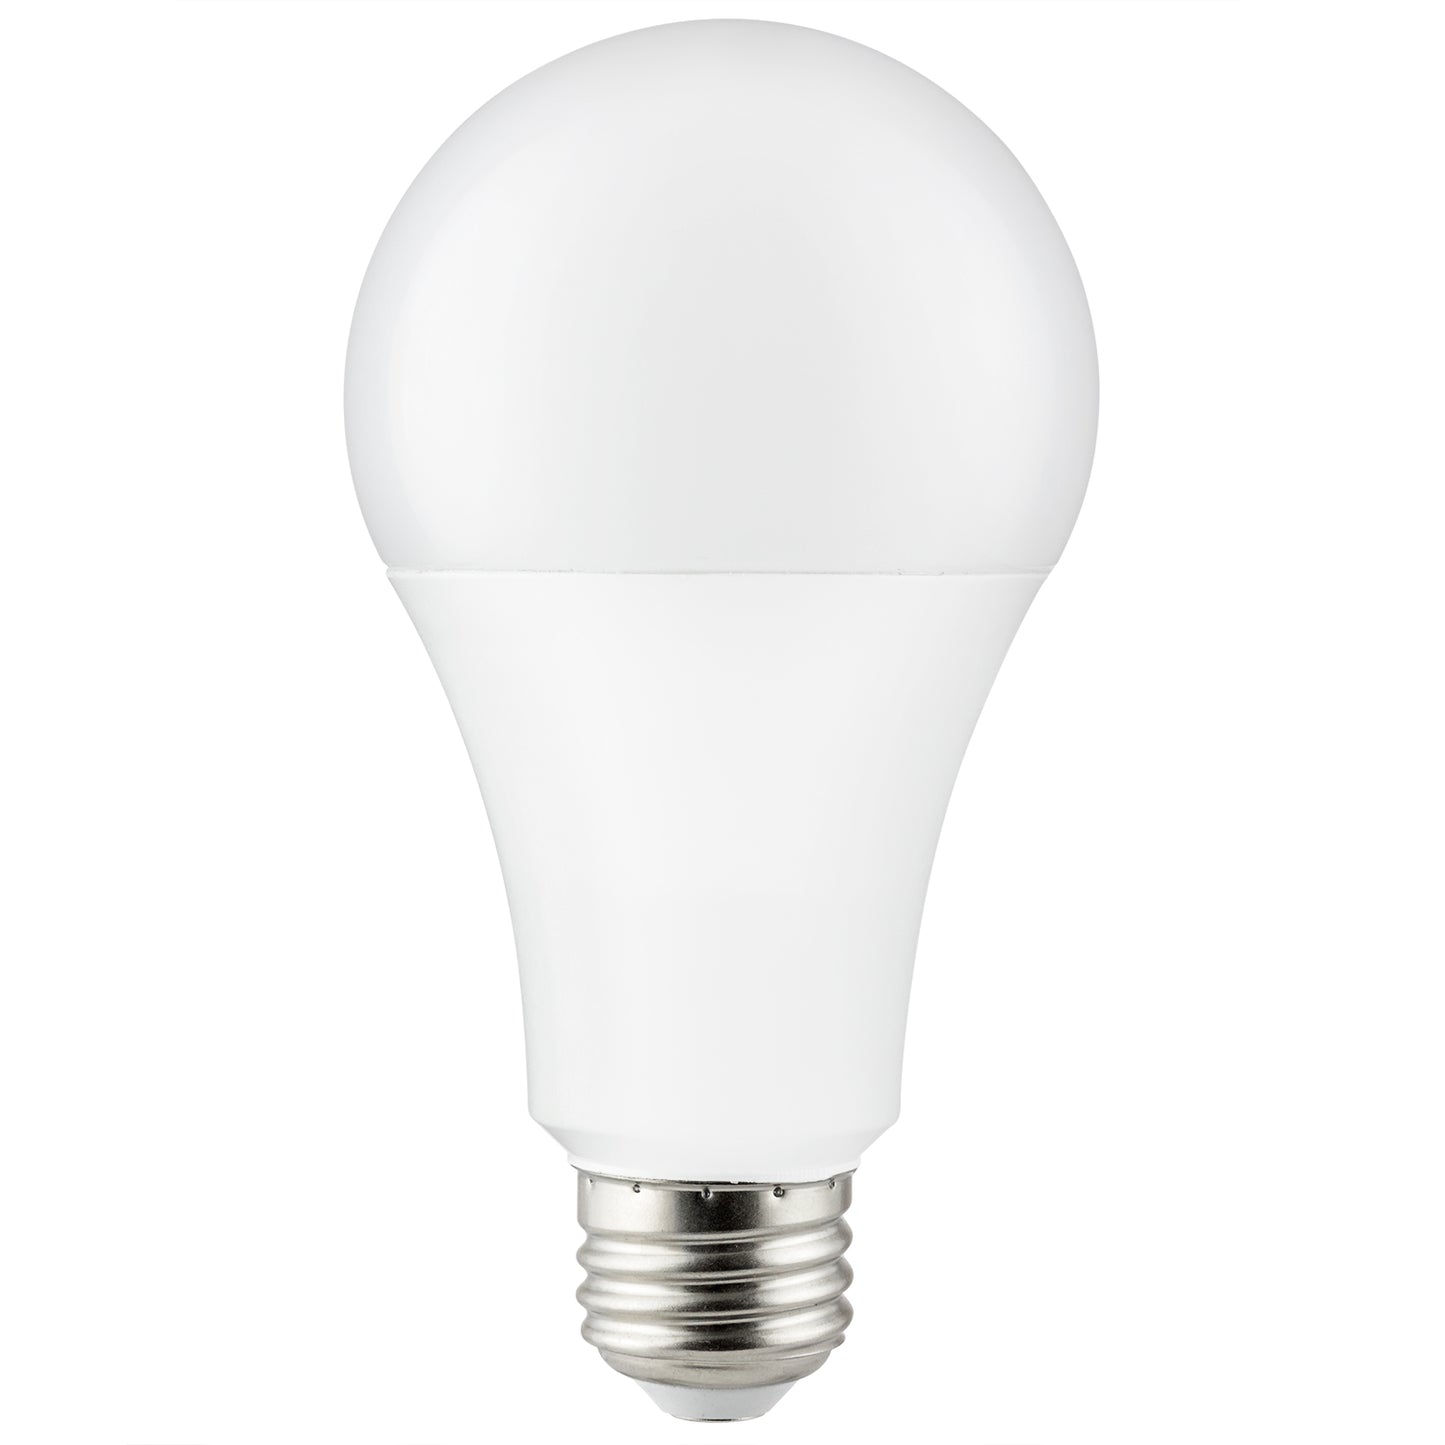 Sunlite 80805 LED A19 Light Bulb, 15 Watts (100 Watt Equivalent), 1600 Lumens, 120 Volts, Dimmable, Medium E26 Base, Energy Star, UL Listed, 2700K Soft White, 6 Pack